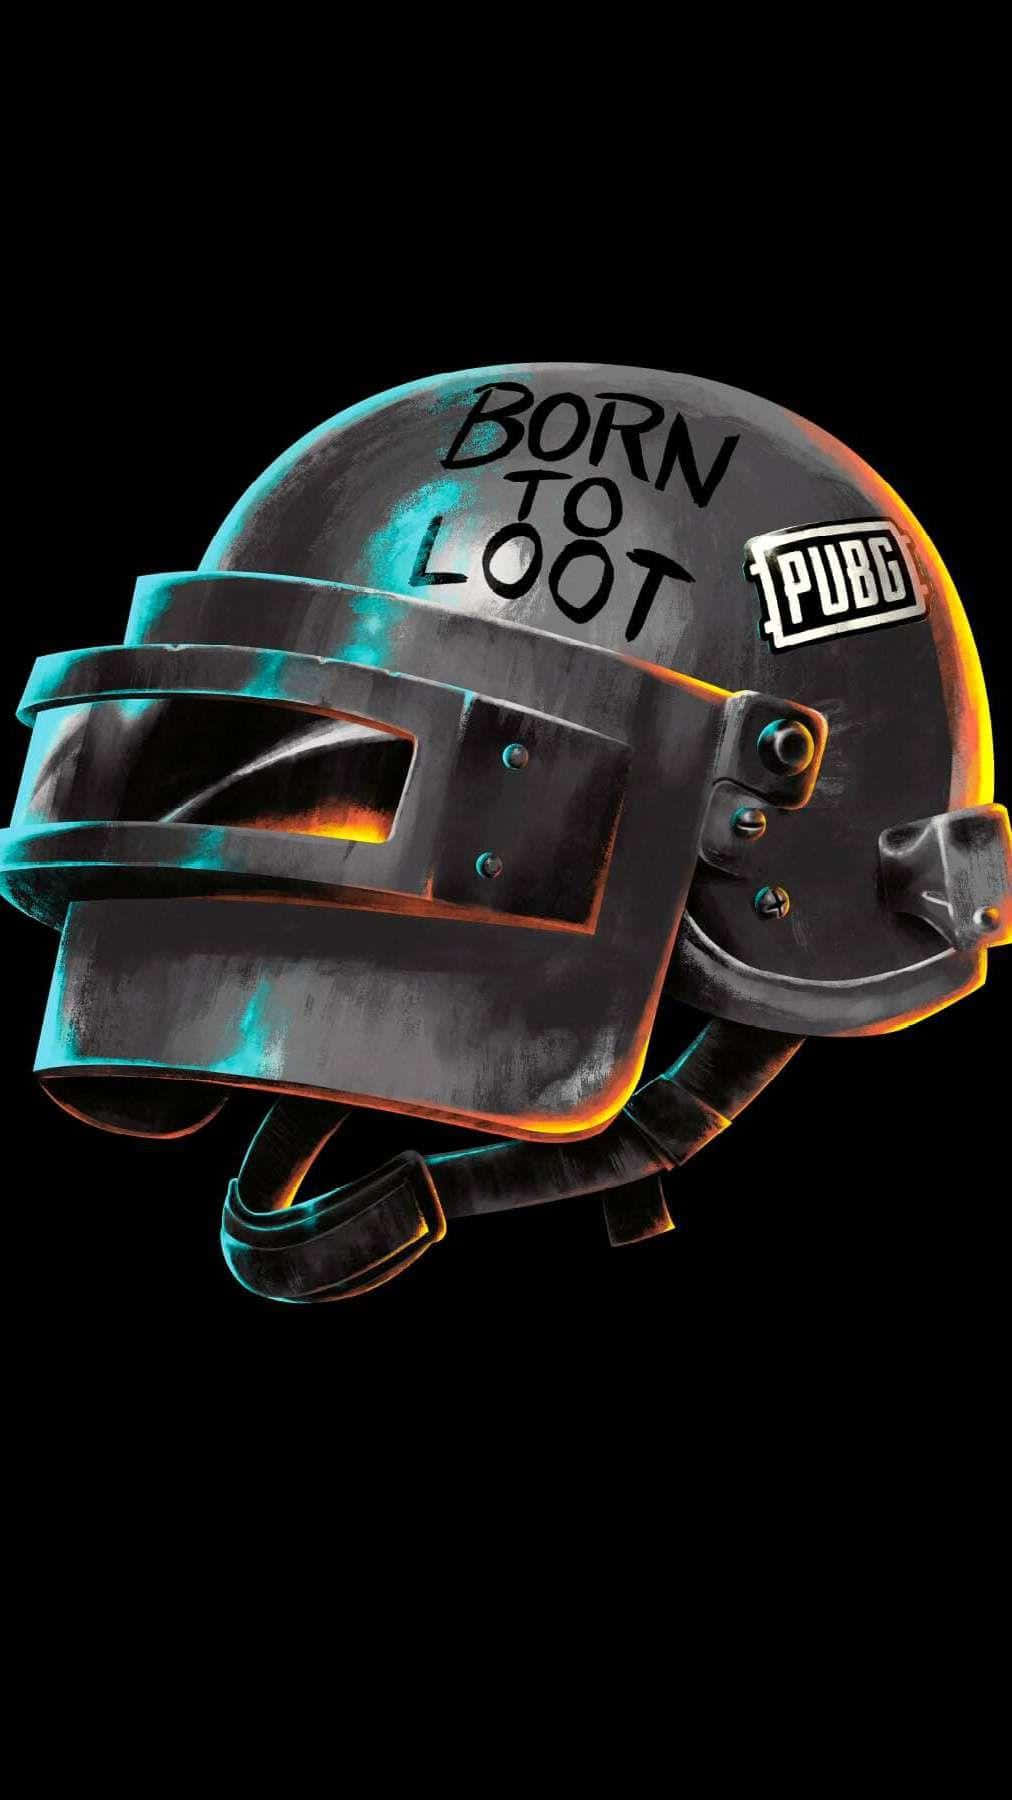 Born To Loot Helmet PUBG iPhone Wallpaper